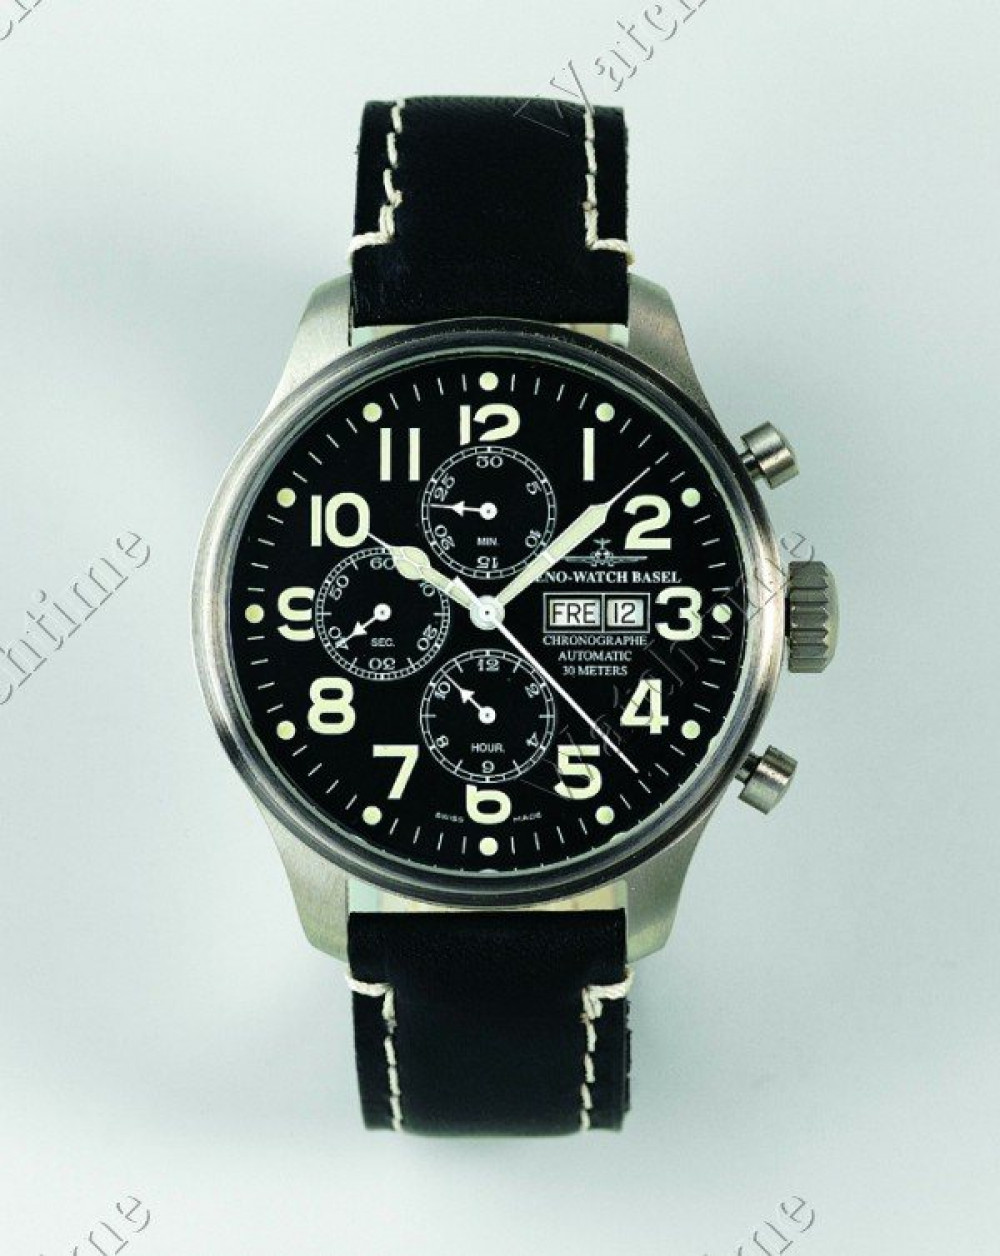 Zegarek firmy Zeno, model Pilot Oversized Chrono